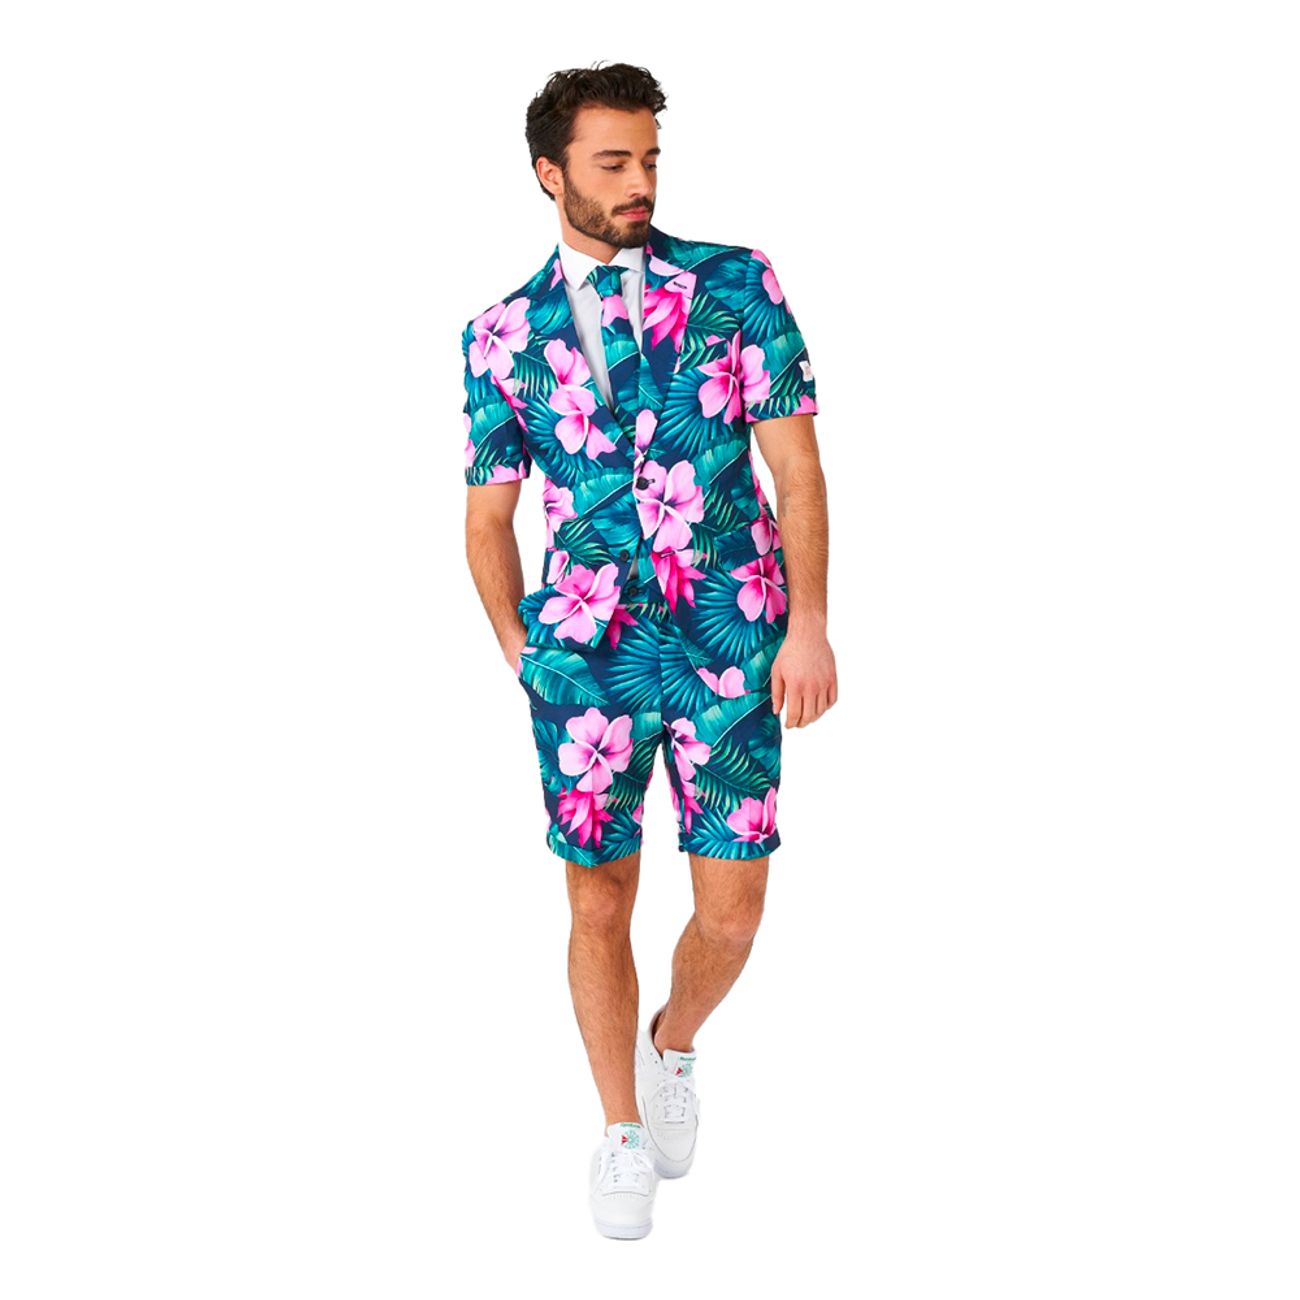 opposuits-hawaii-grande-shorts-kostym-92224-1